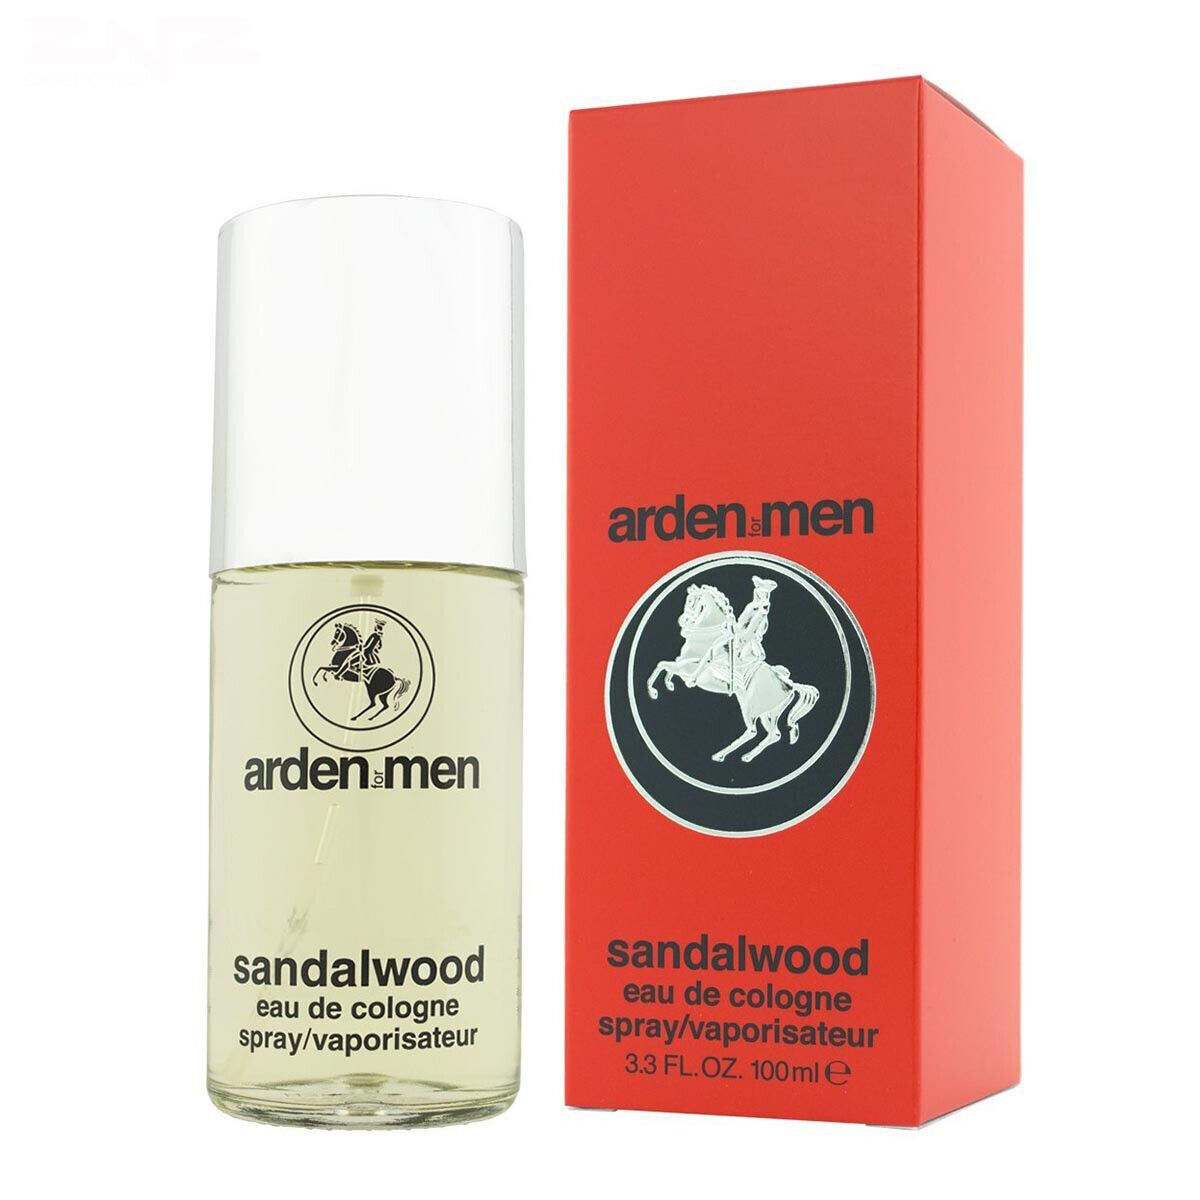 Arden Men Sandalwood by Elizabeth Arden 3.3 oz / 100 ml Eau De Cologne spray - $164.64